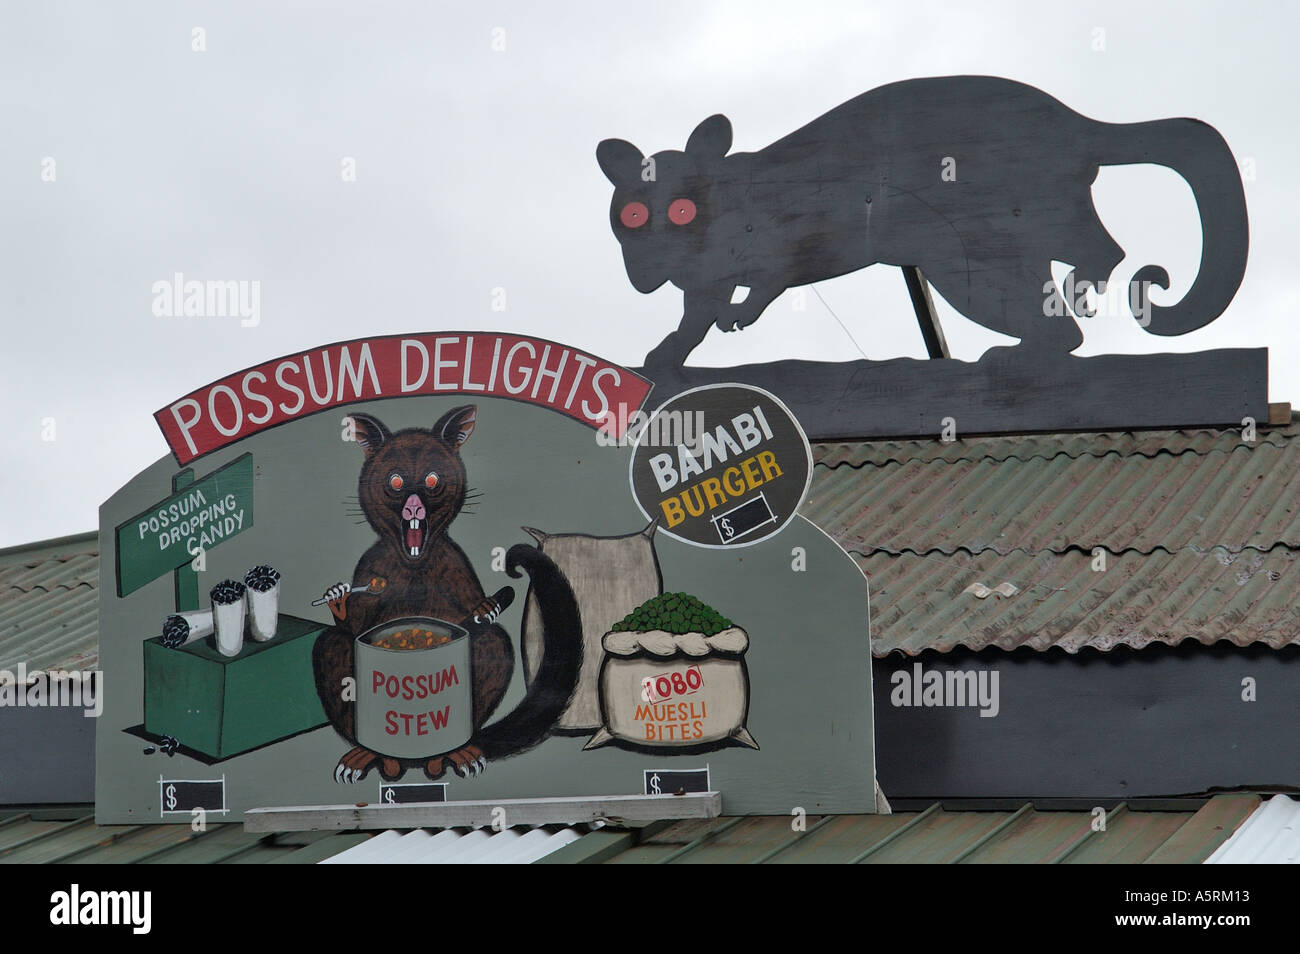 roadhouse offering possum specialities near Pokekura on West Coast of South Island New Zealand Stock Photo